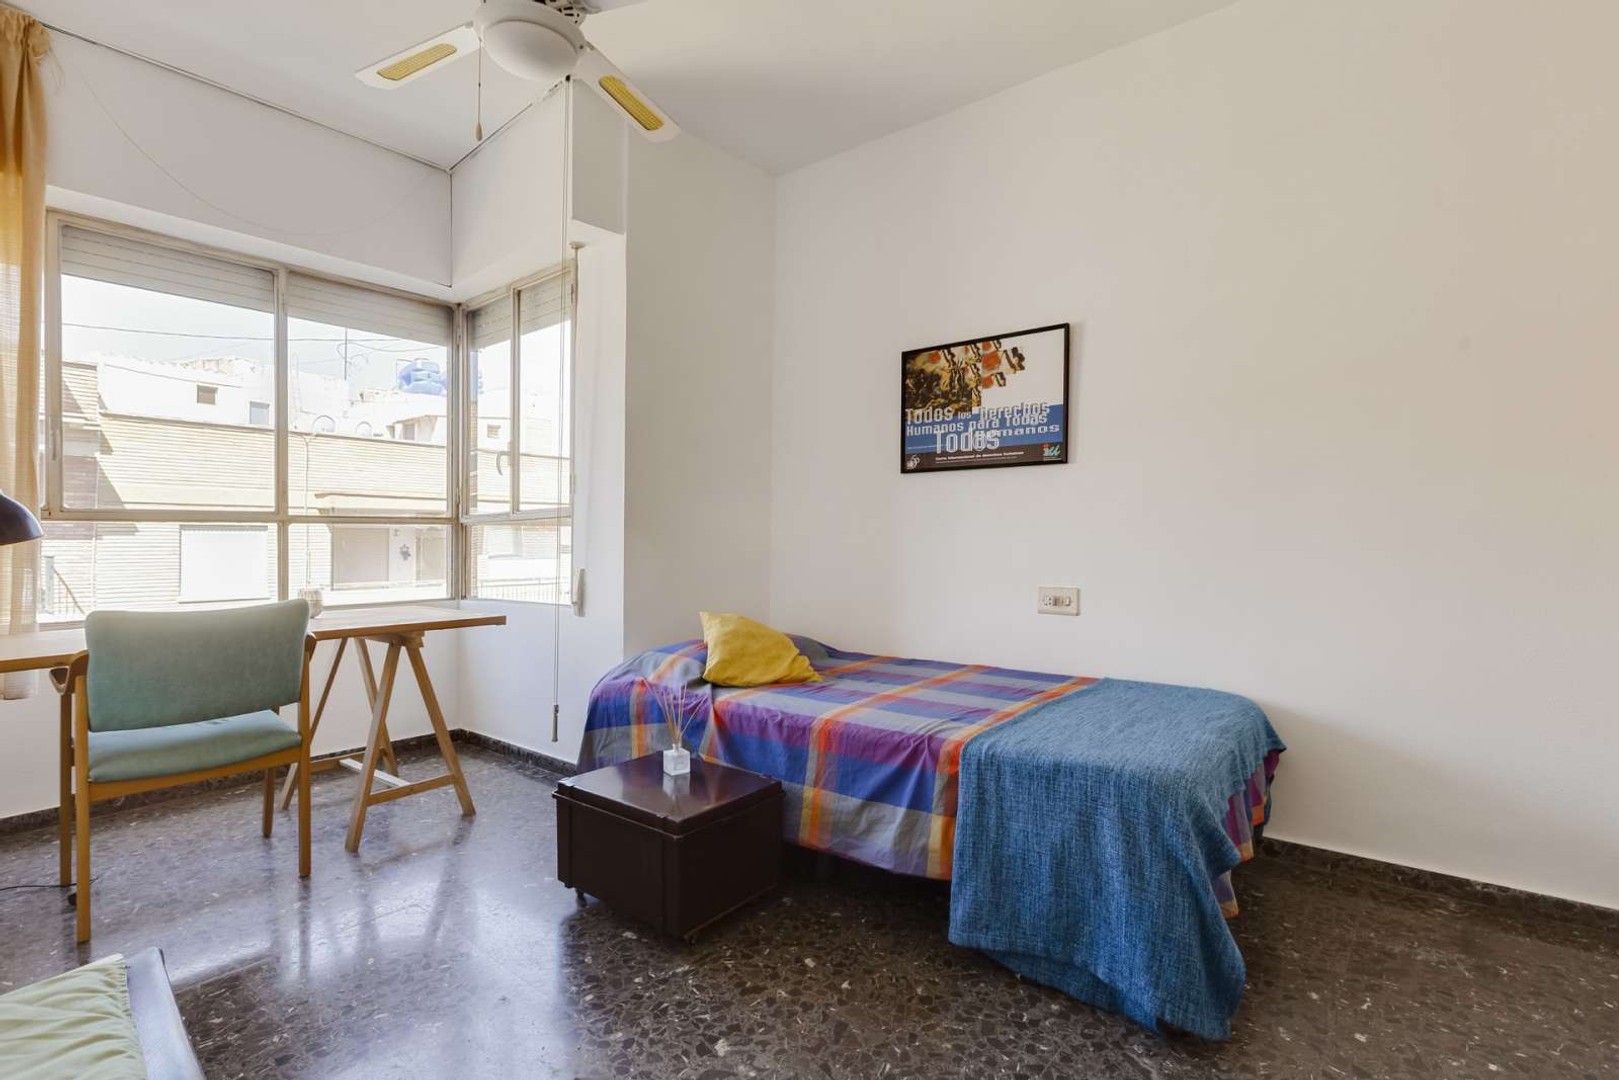 Habitación privada barata en Murcia